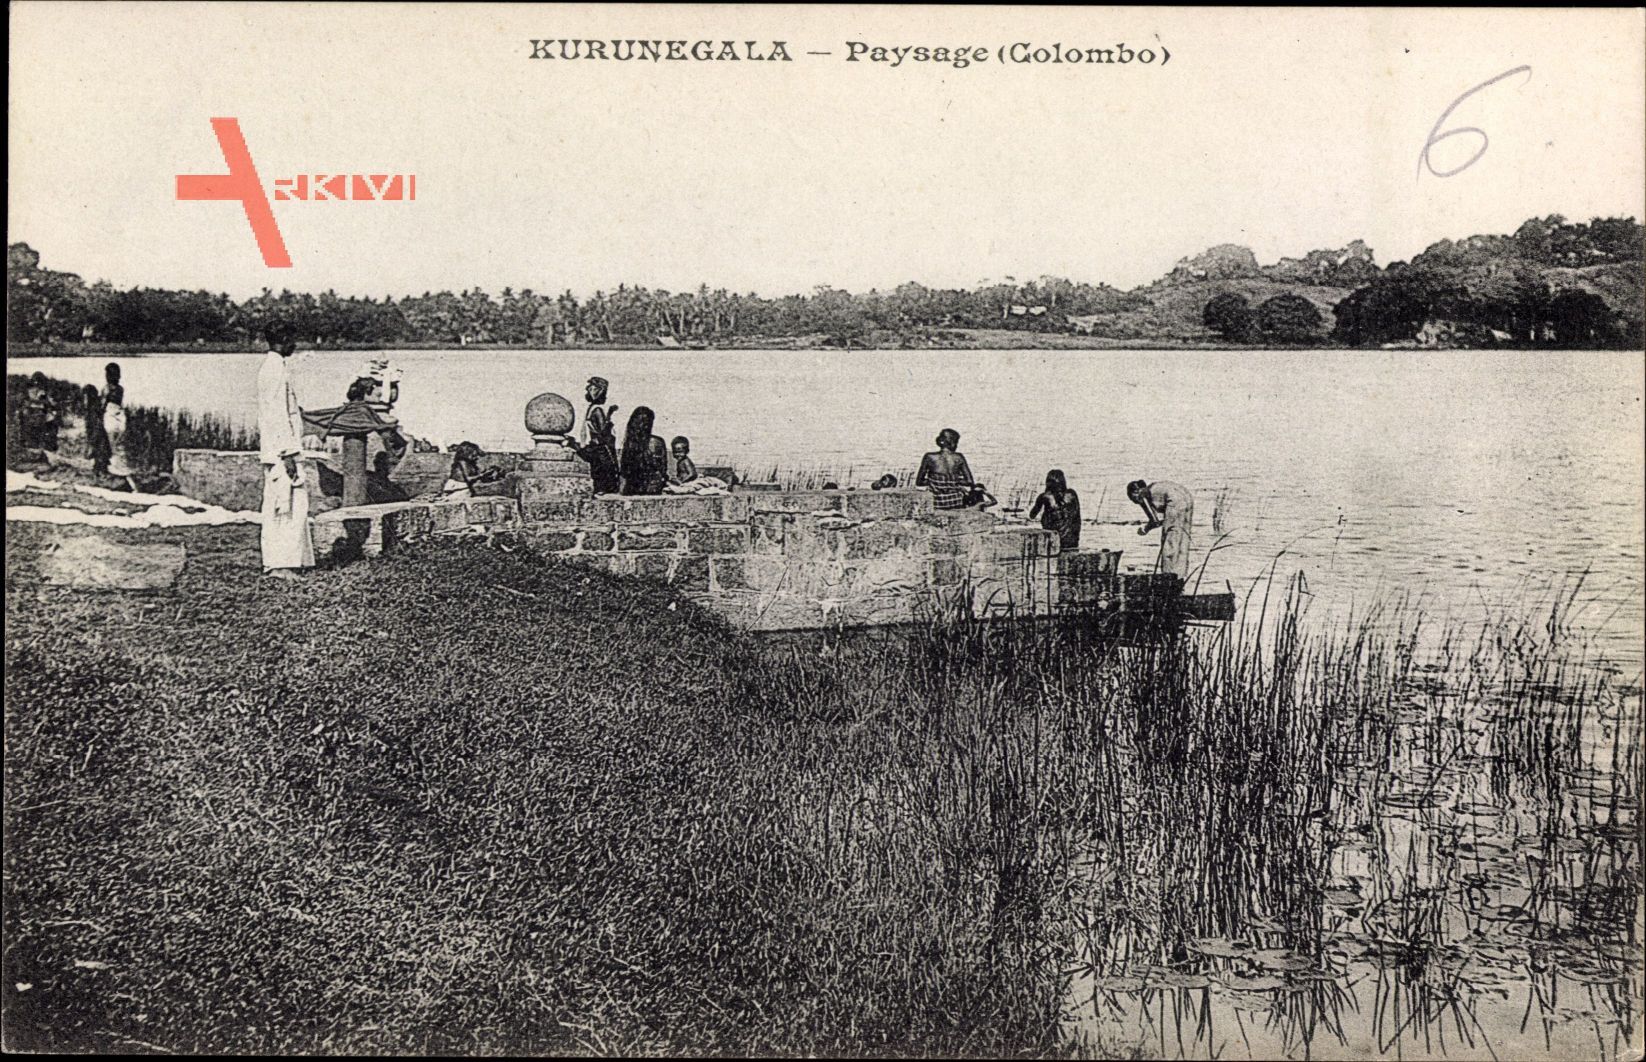 Kurungeala Sri Lanka, Paysage, Colombo, Flusspartie, Frauen am Wasser